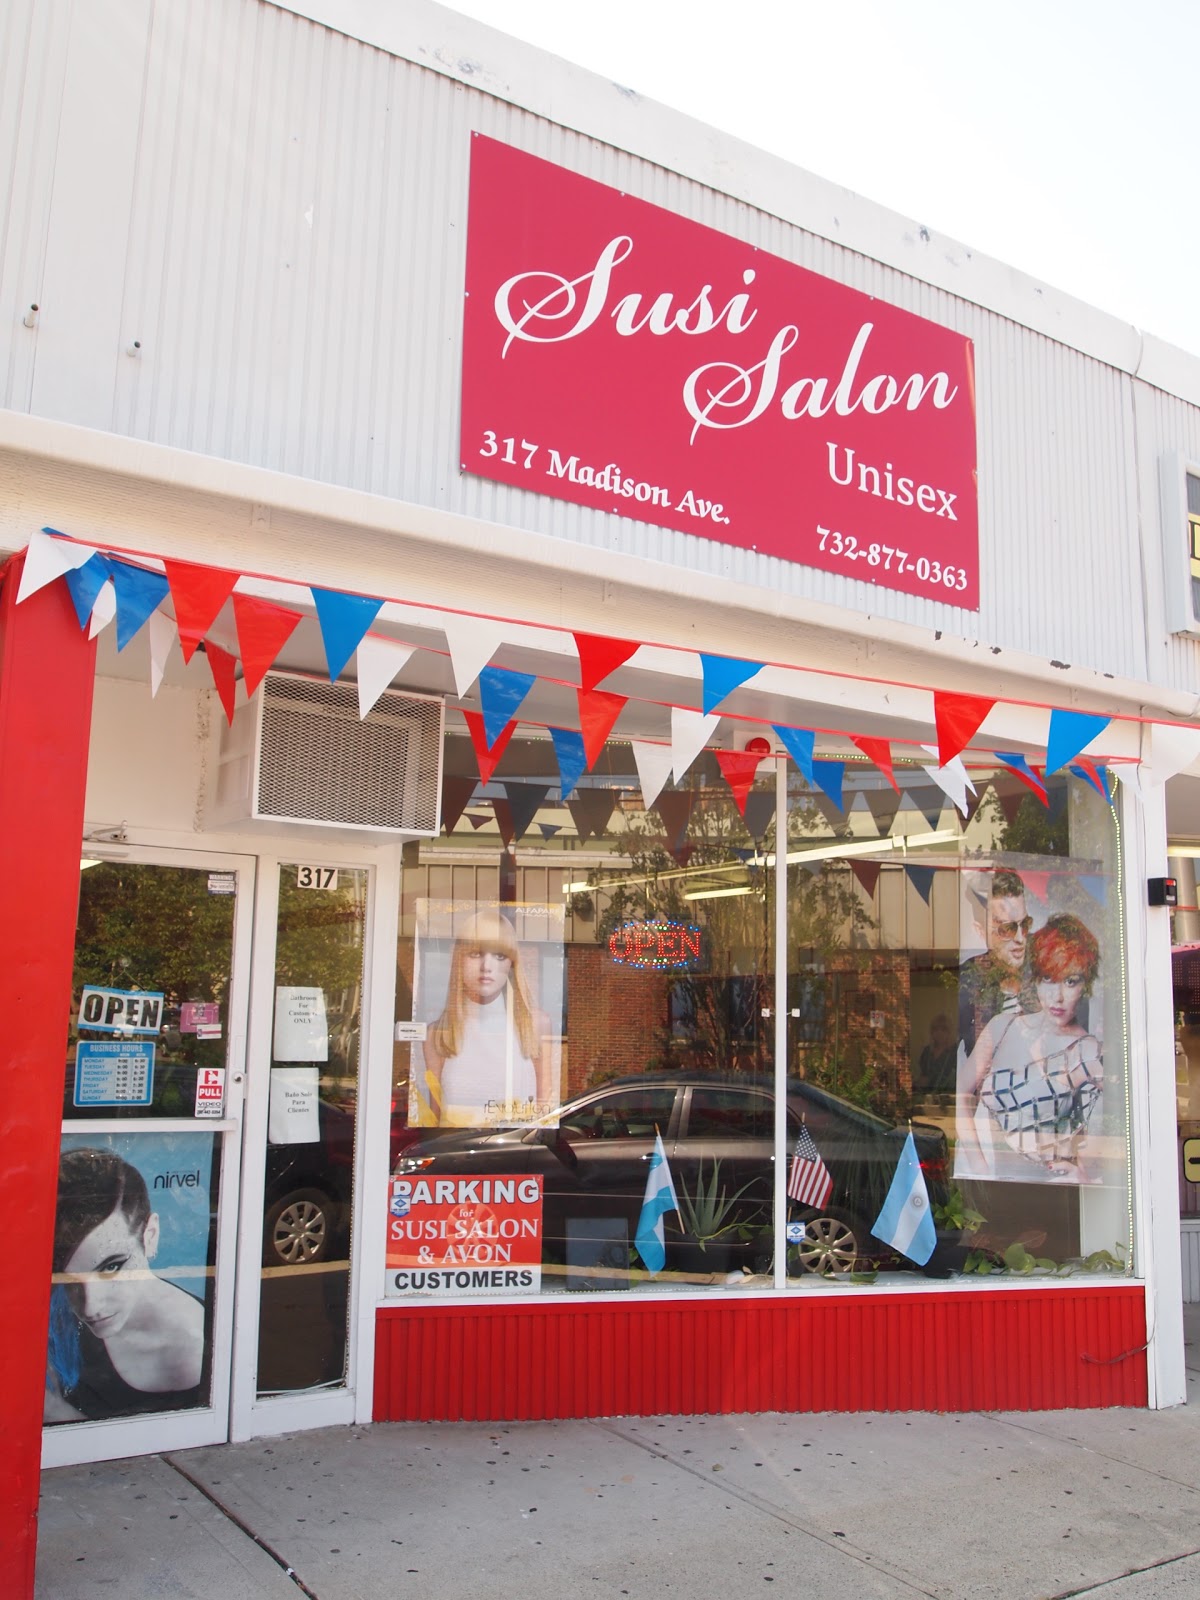 Photo of Susi Salon in Perth Amboy City, New Jersey, United States - 4 Picture of Point of interest, Establishment, Beauty salon